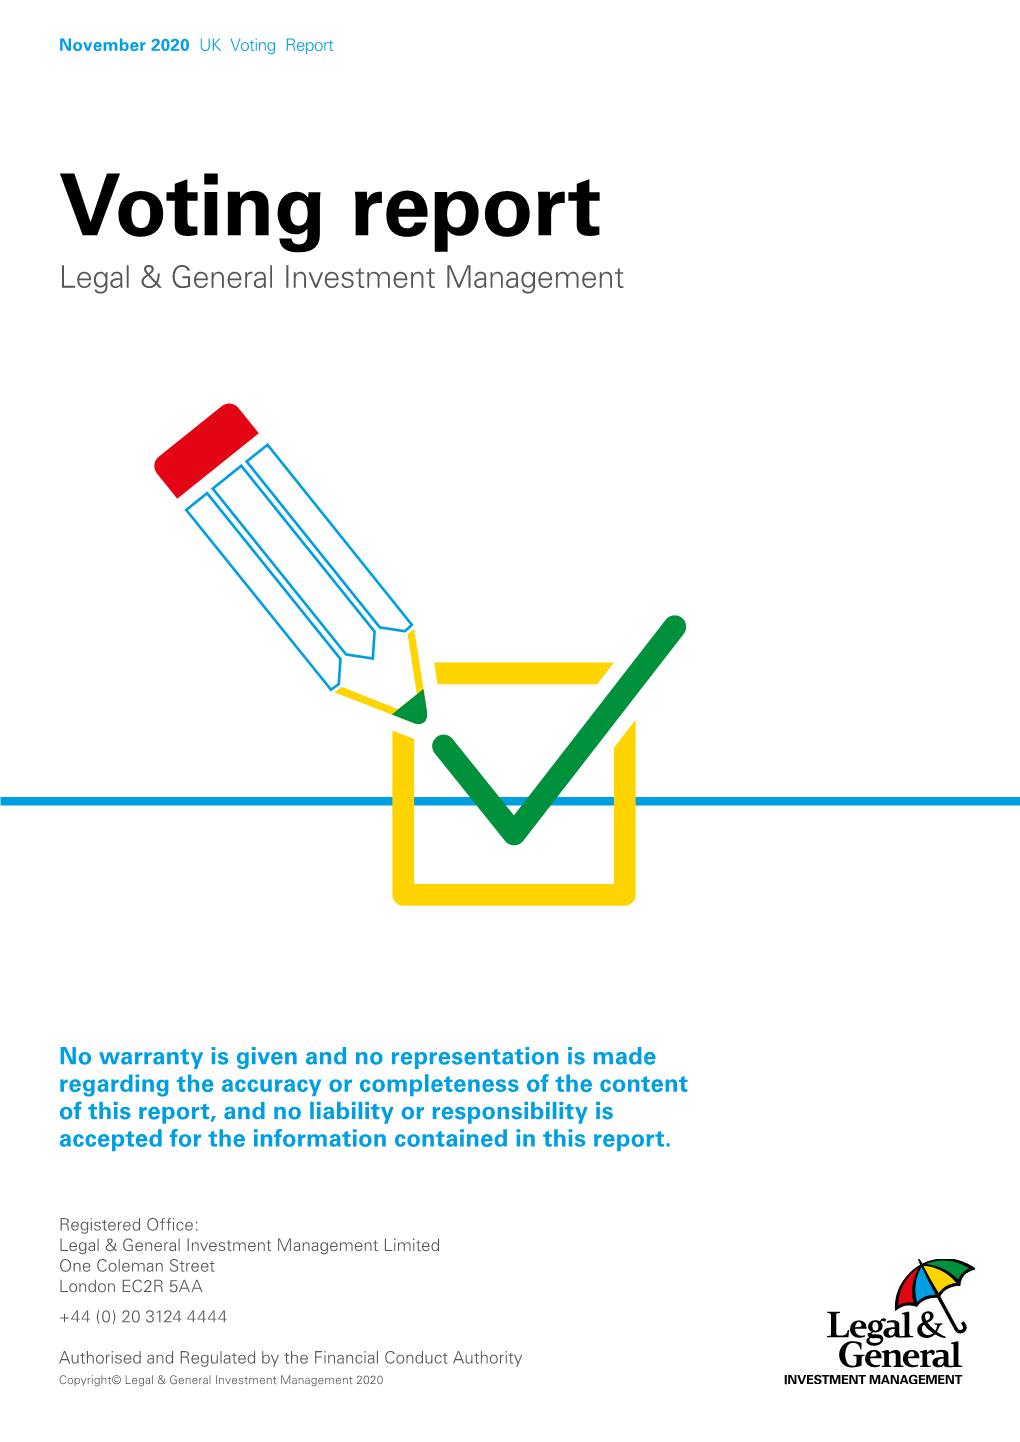 Voting Report